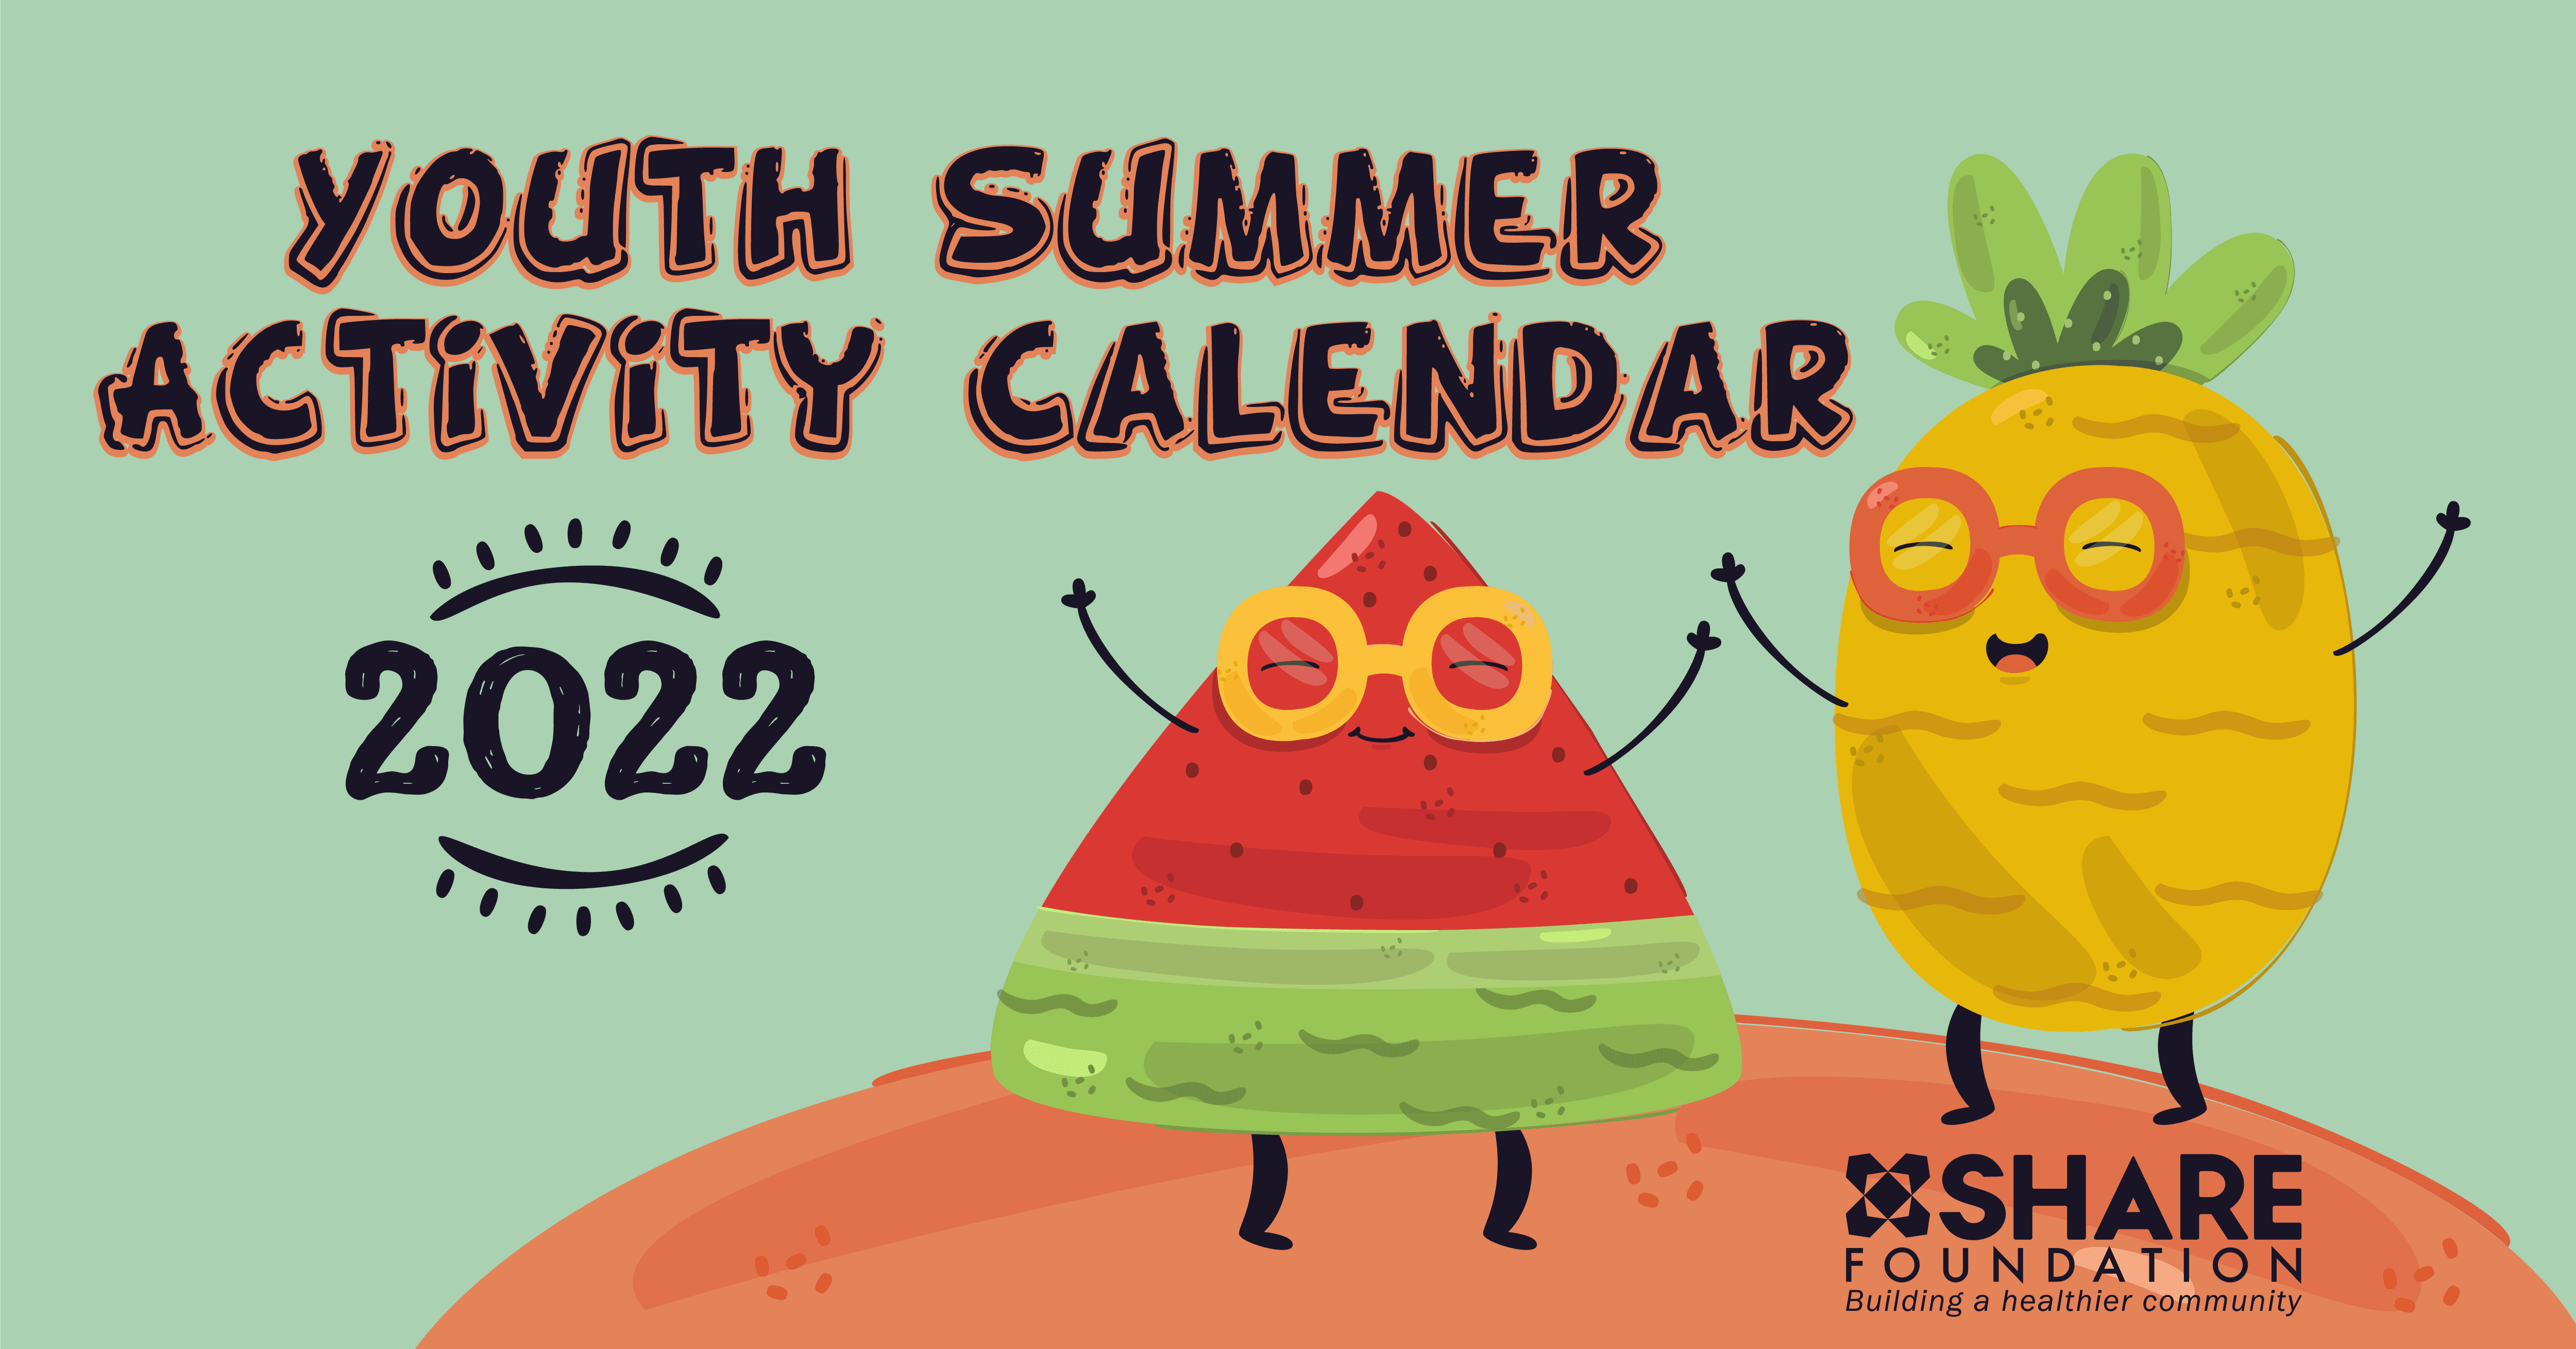 SHARE Foundation Youth Summer Activity Calendar Available